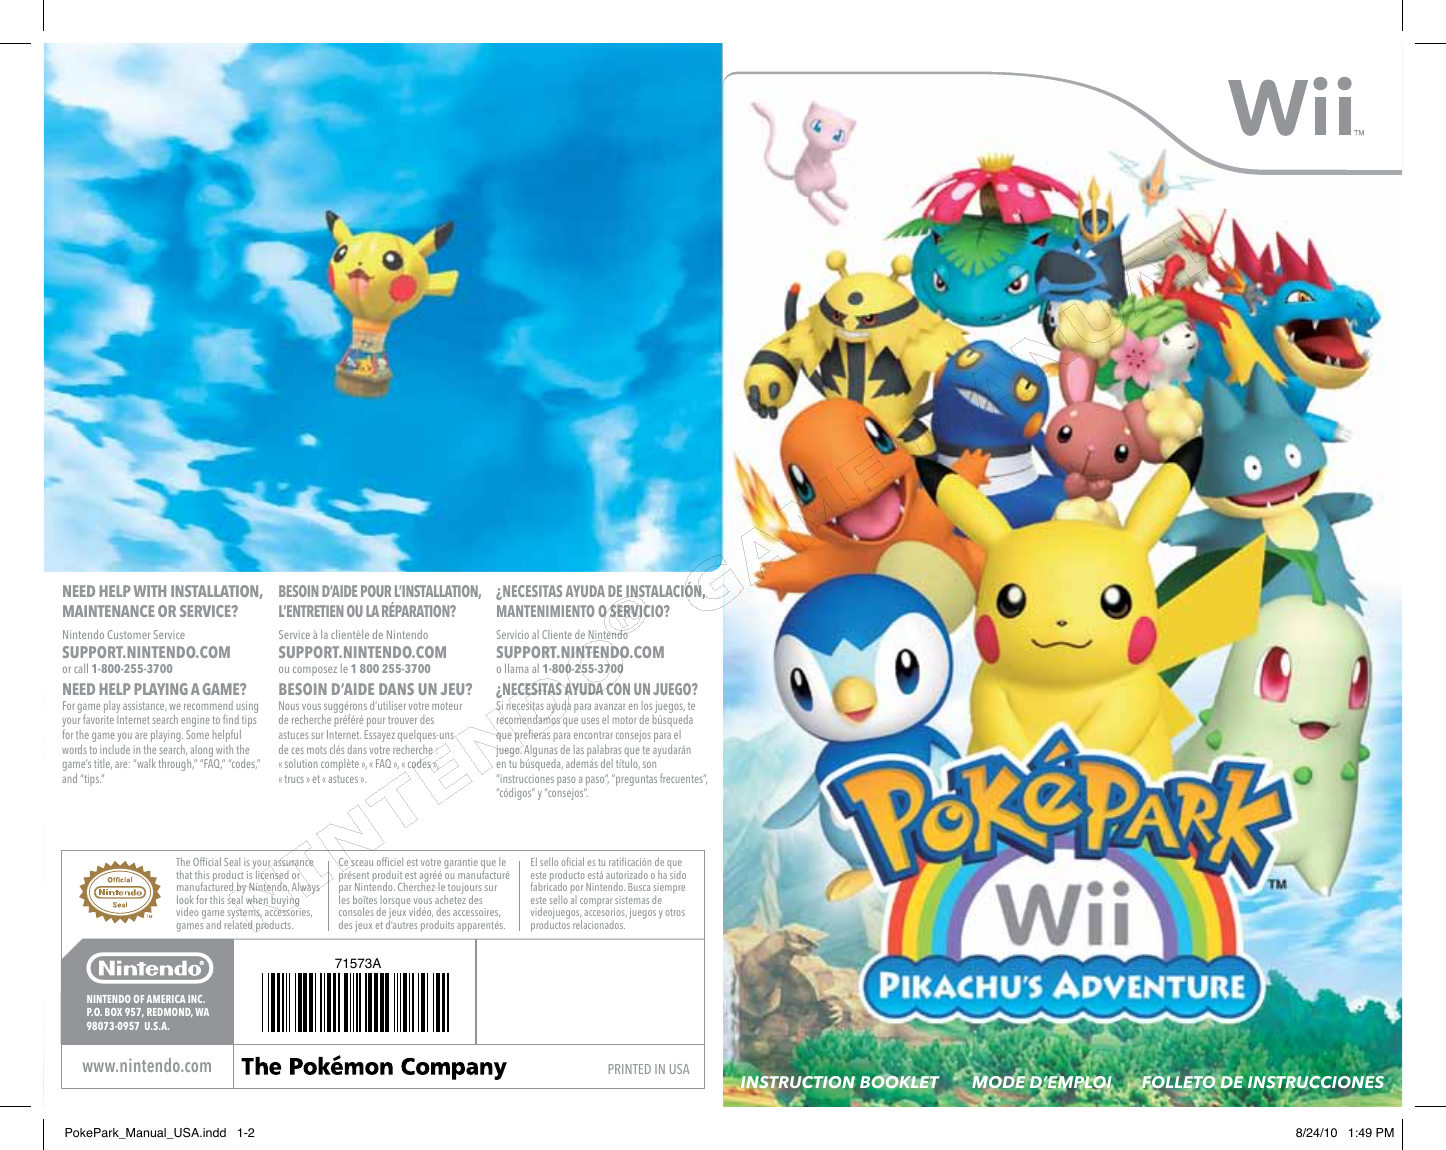 nintendo-pokepark-pikachus-adventure-71573a-users-manual